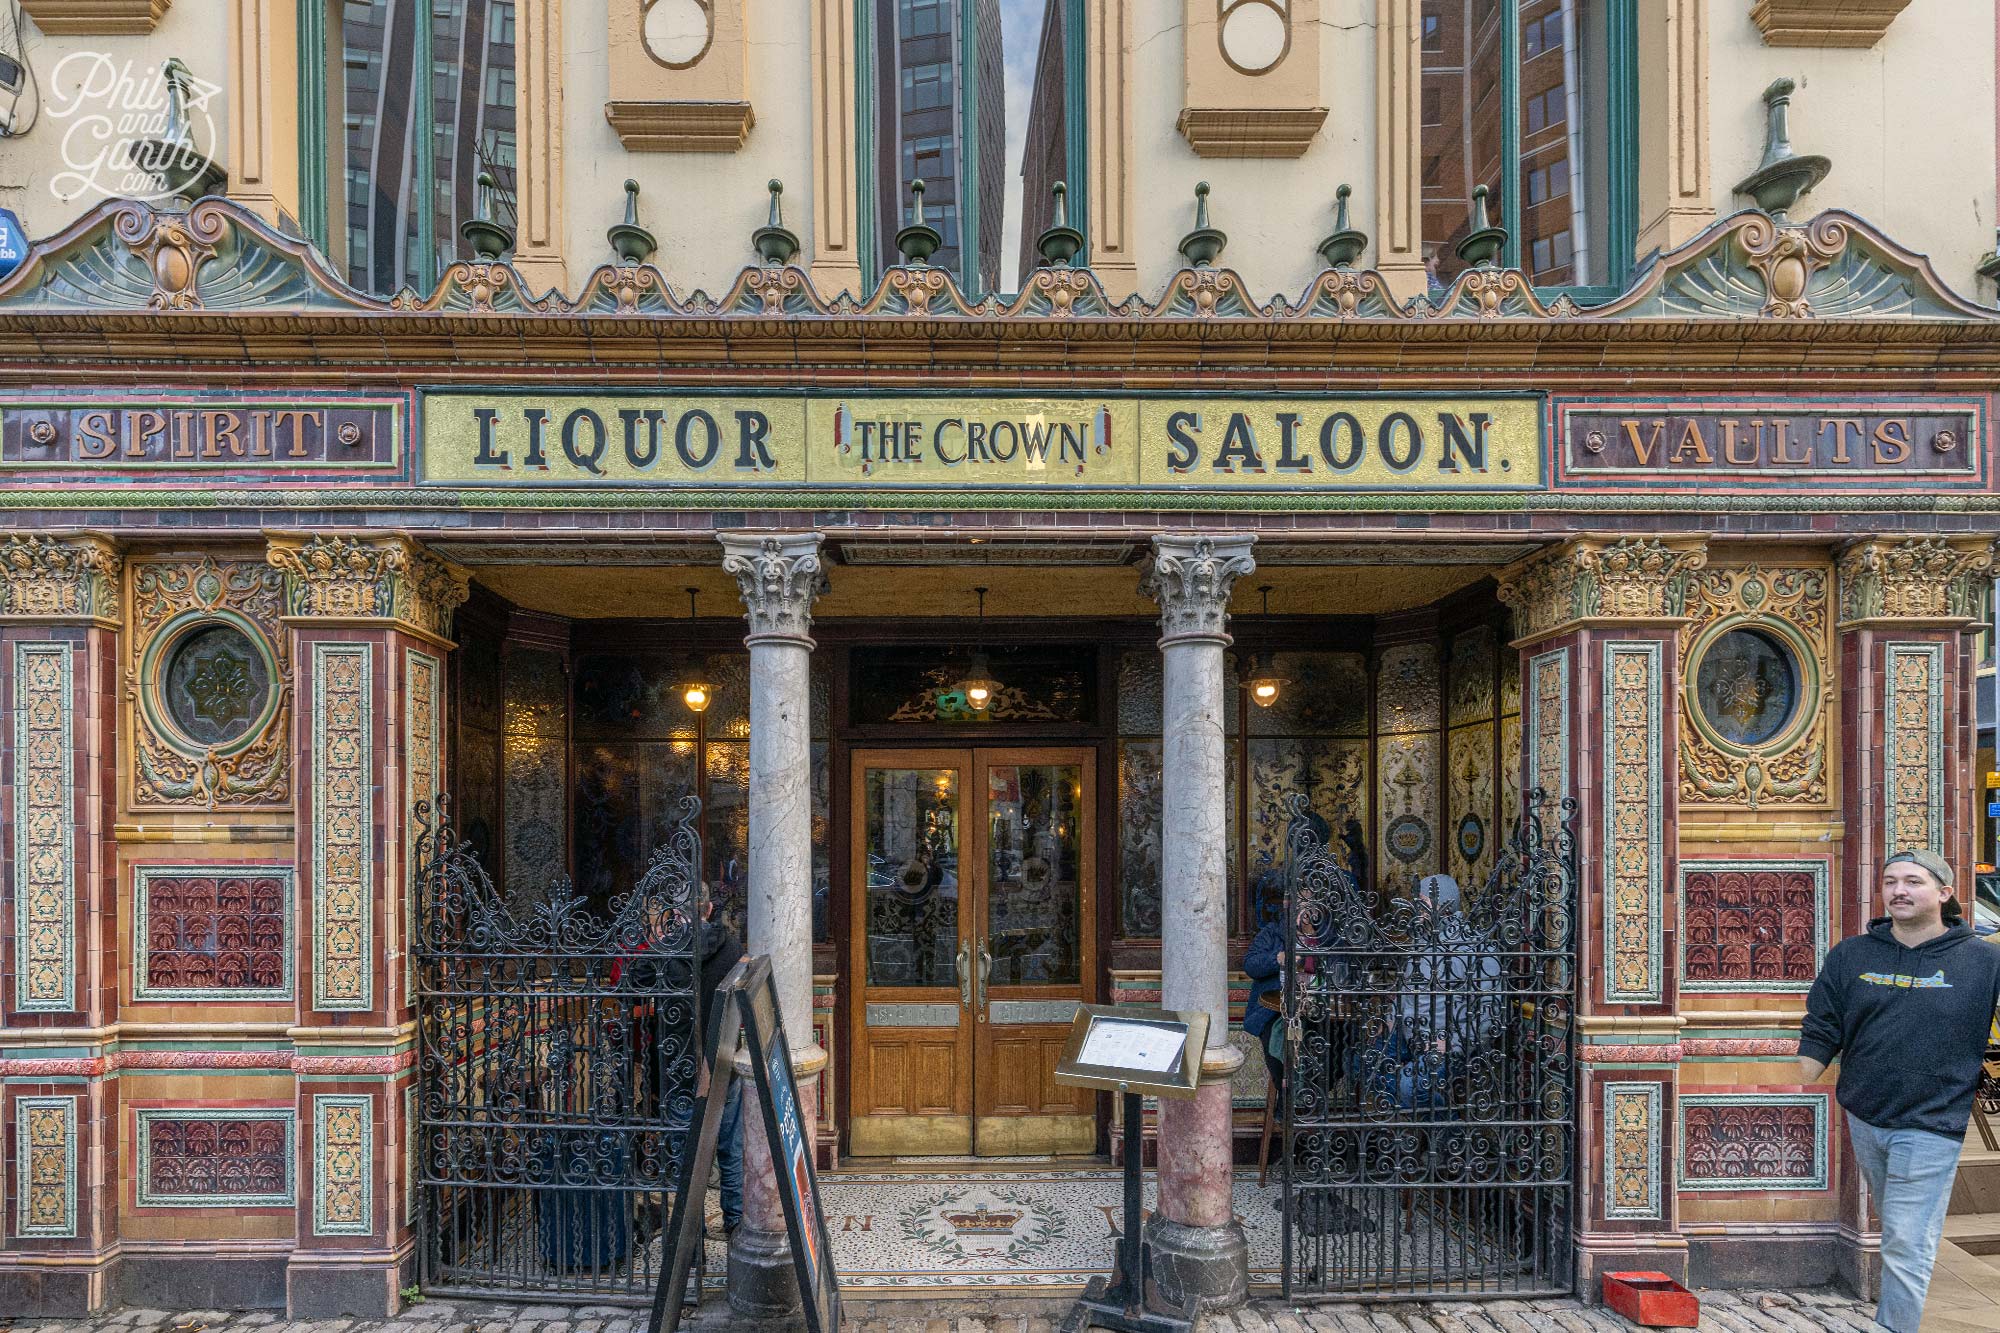 The beautiful and historic Crown Liquor Saloon, Belfast